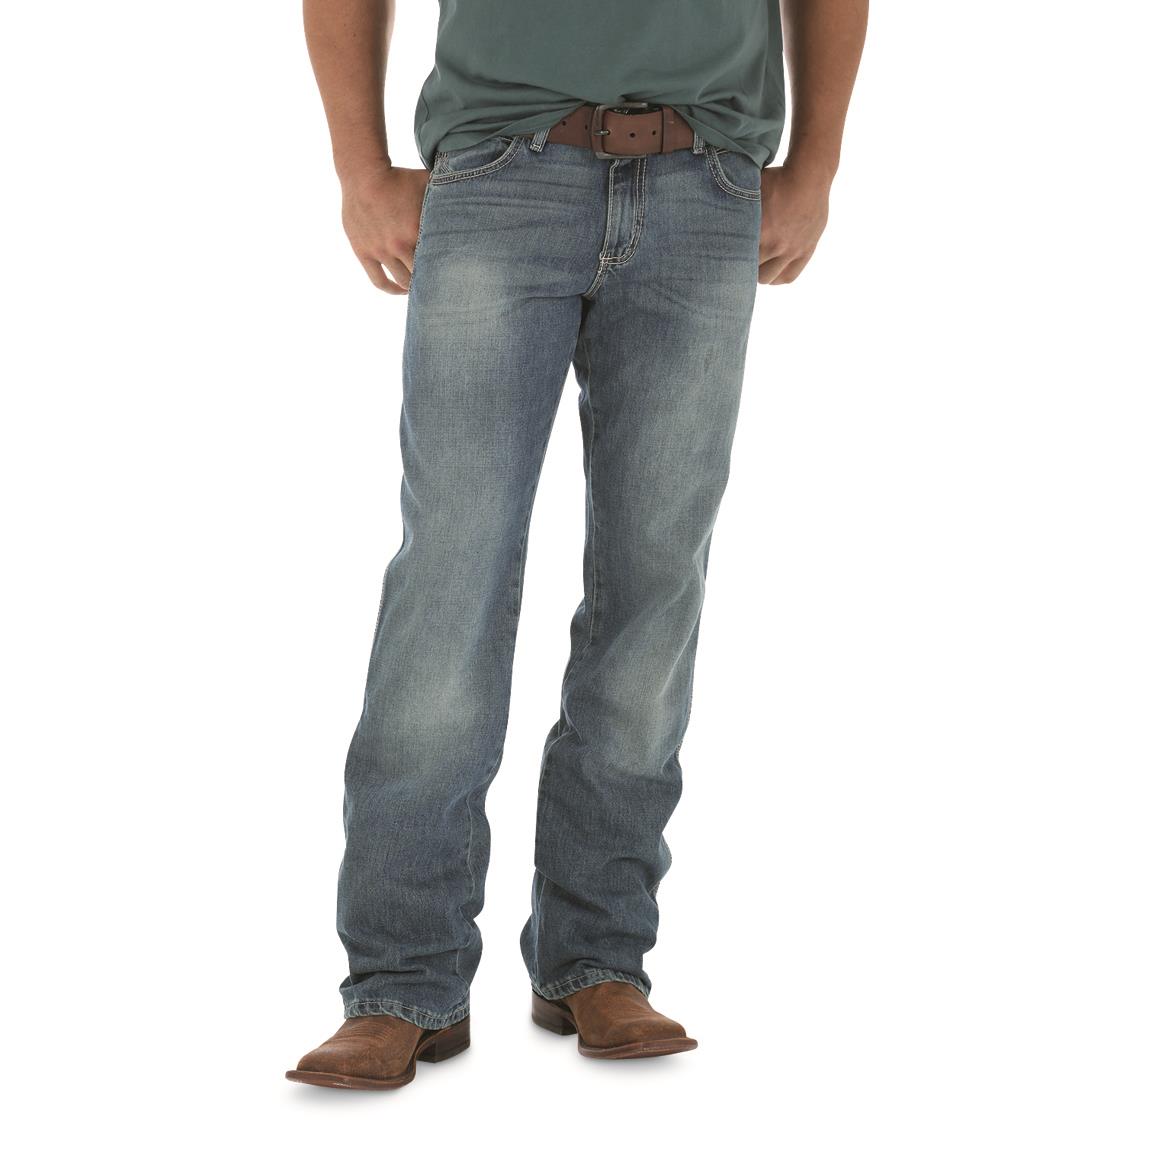 wrangler original bootcut jeans